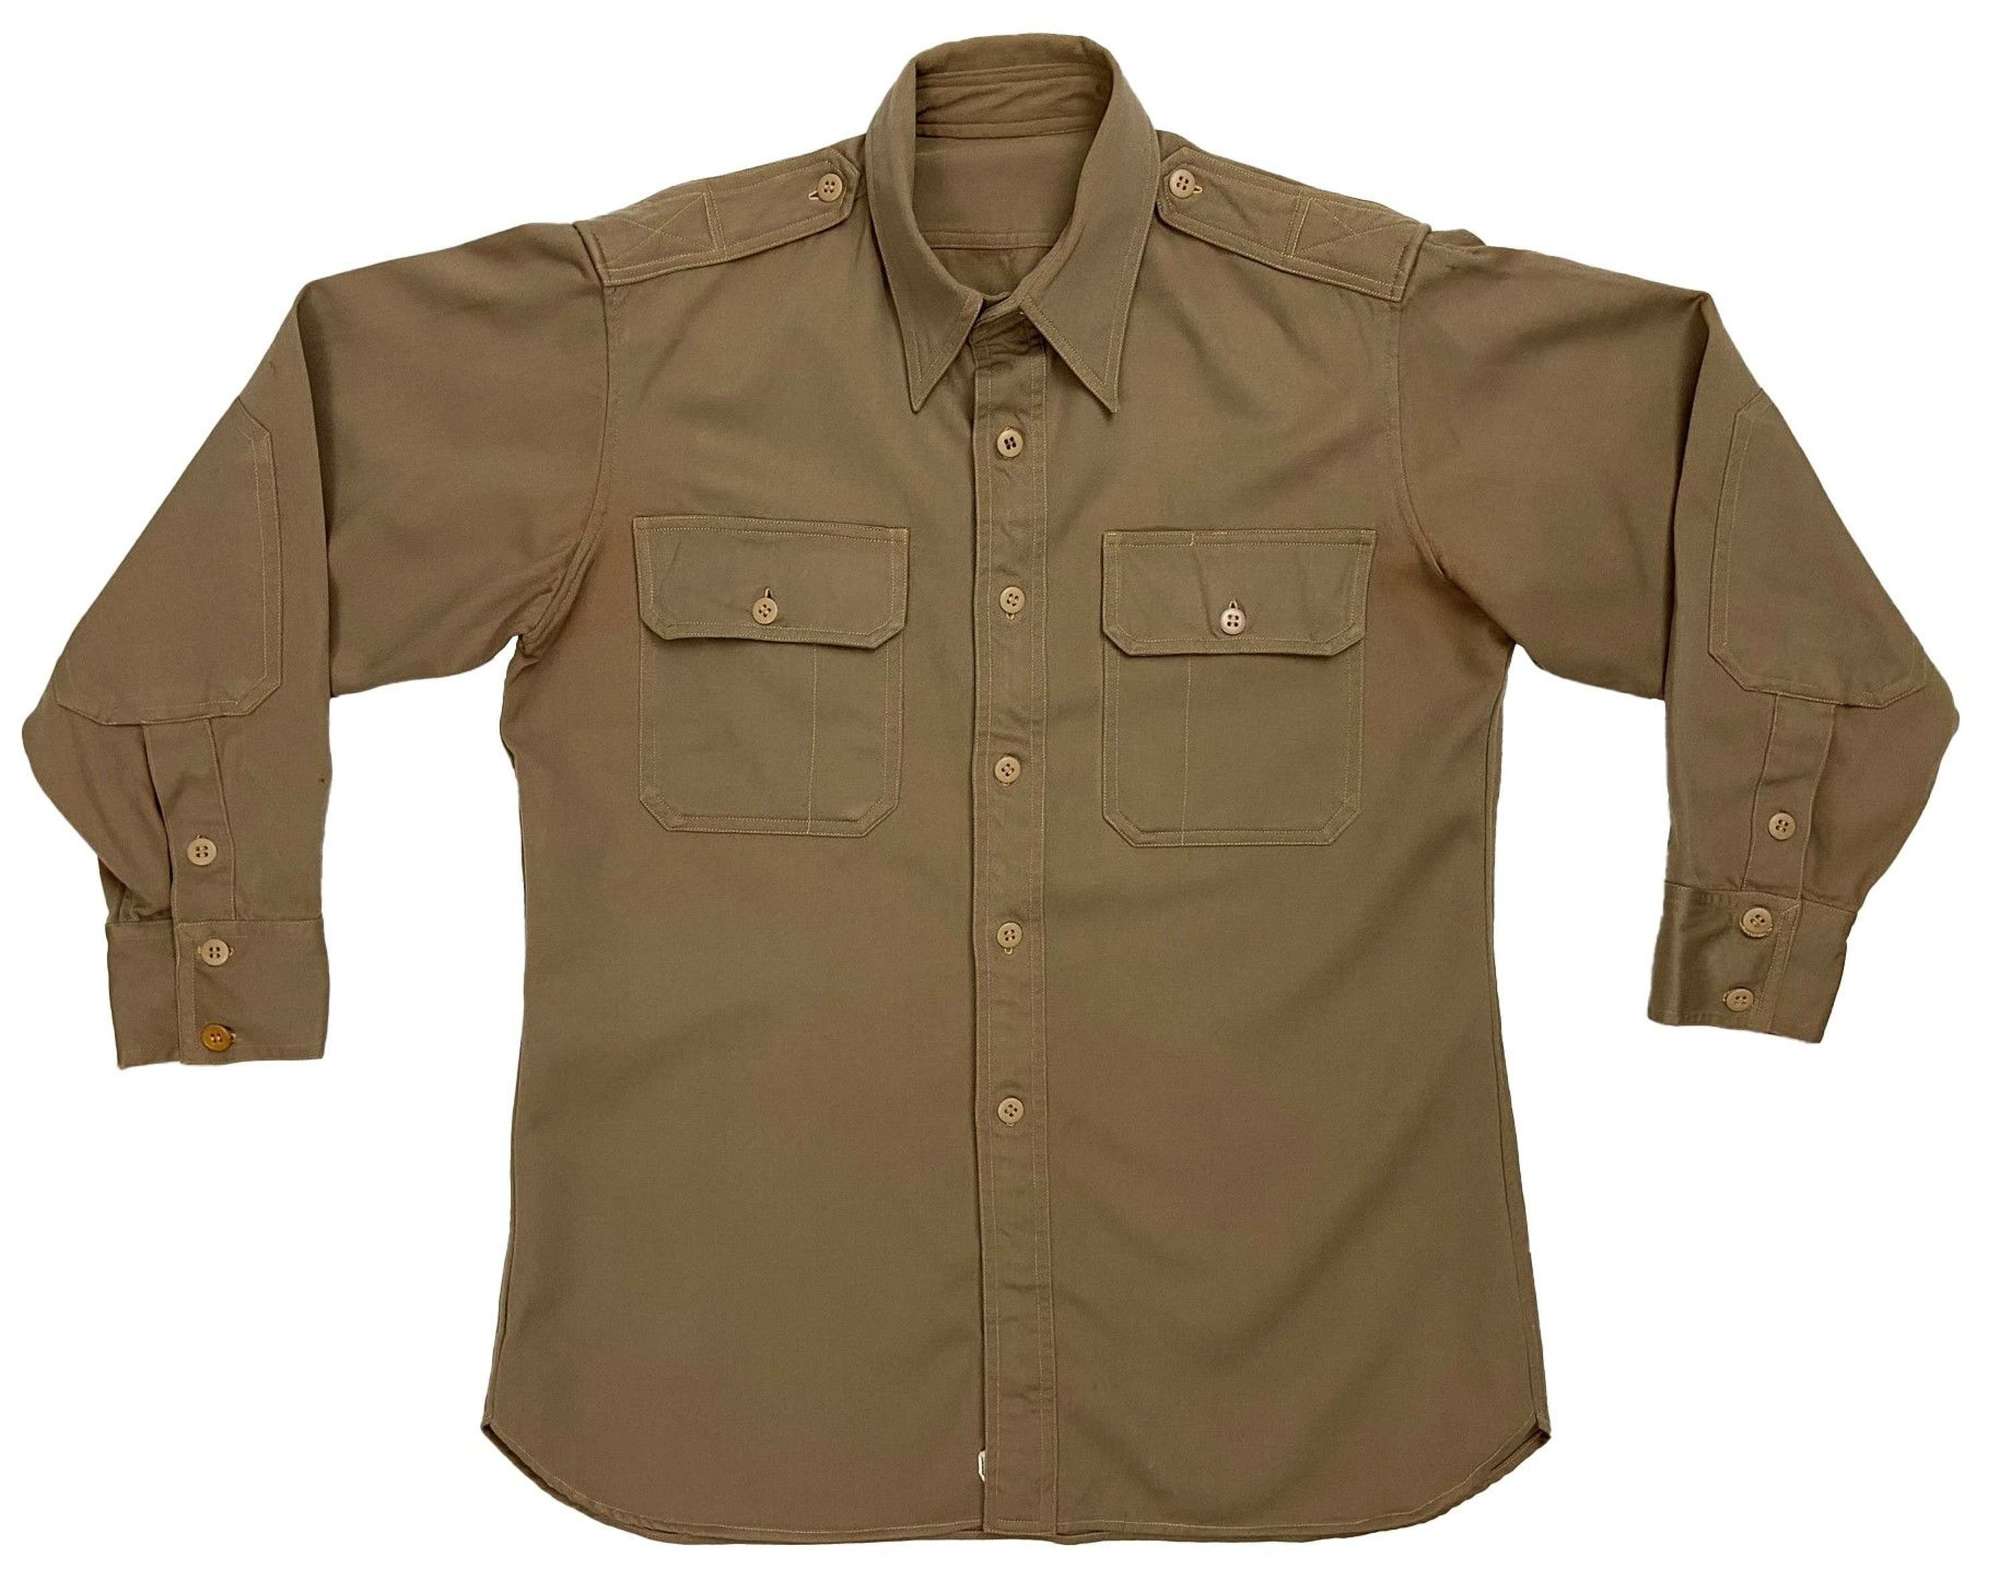 Original US Army Regulation Tan Shirt